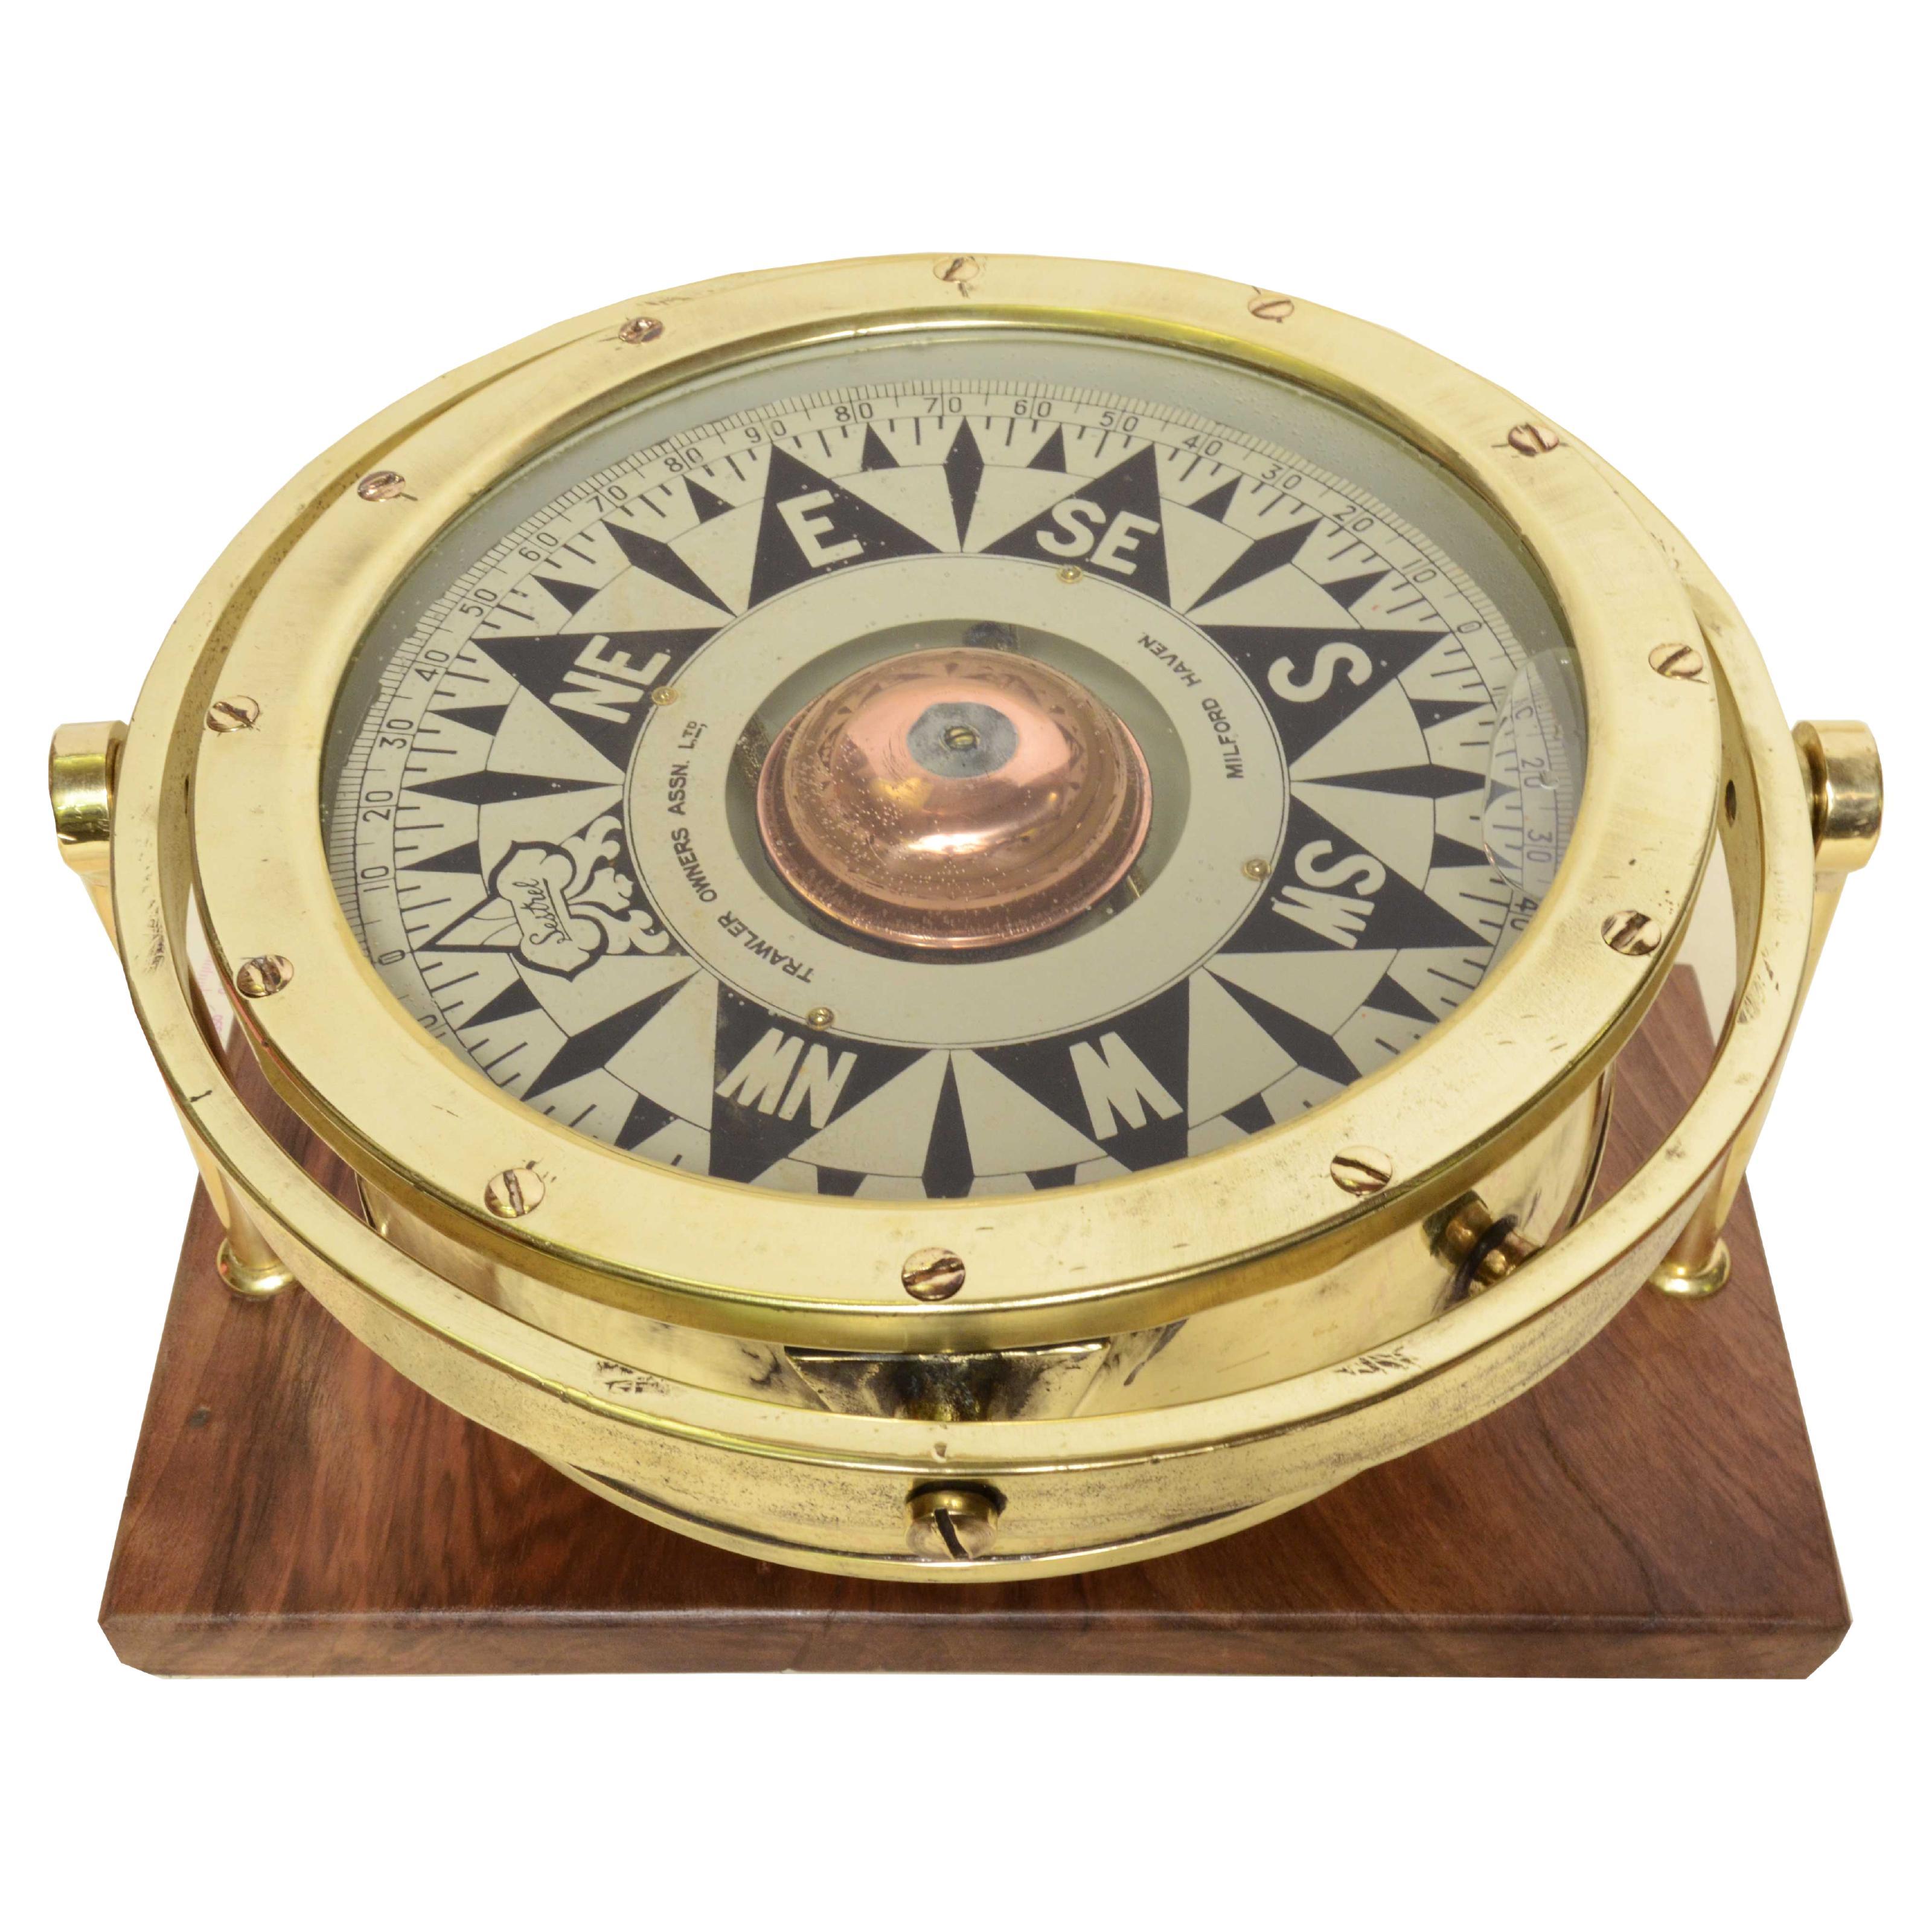 1920s Sestrel Brass Nautical Gimbal Compass Antique Maritime